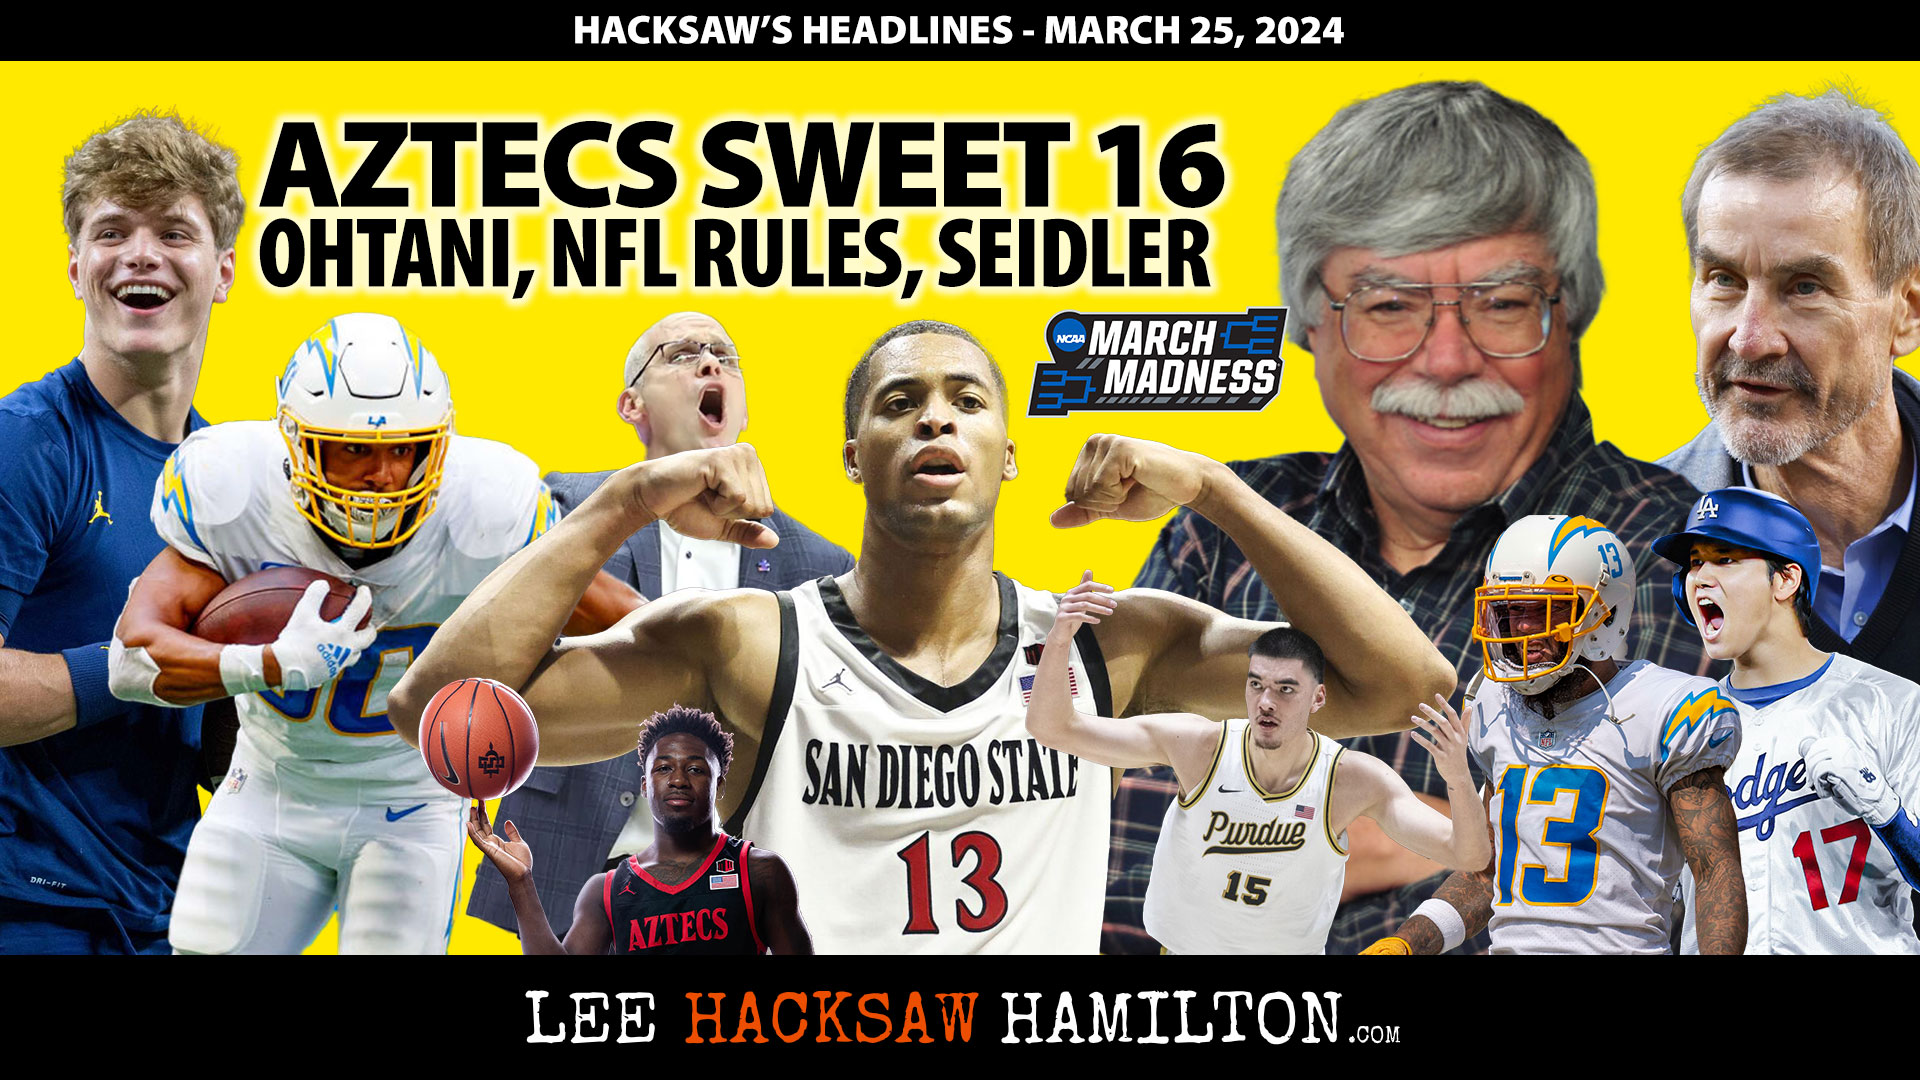 Lee Hacksaw Hamilton discusses Aztecs Smash Yale, March Madness, PAC12 coaches, Padres, Seidler, Dodgers, Ohtani, NFL Rules